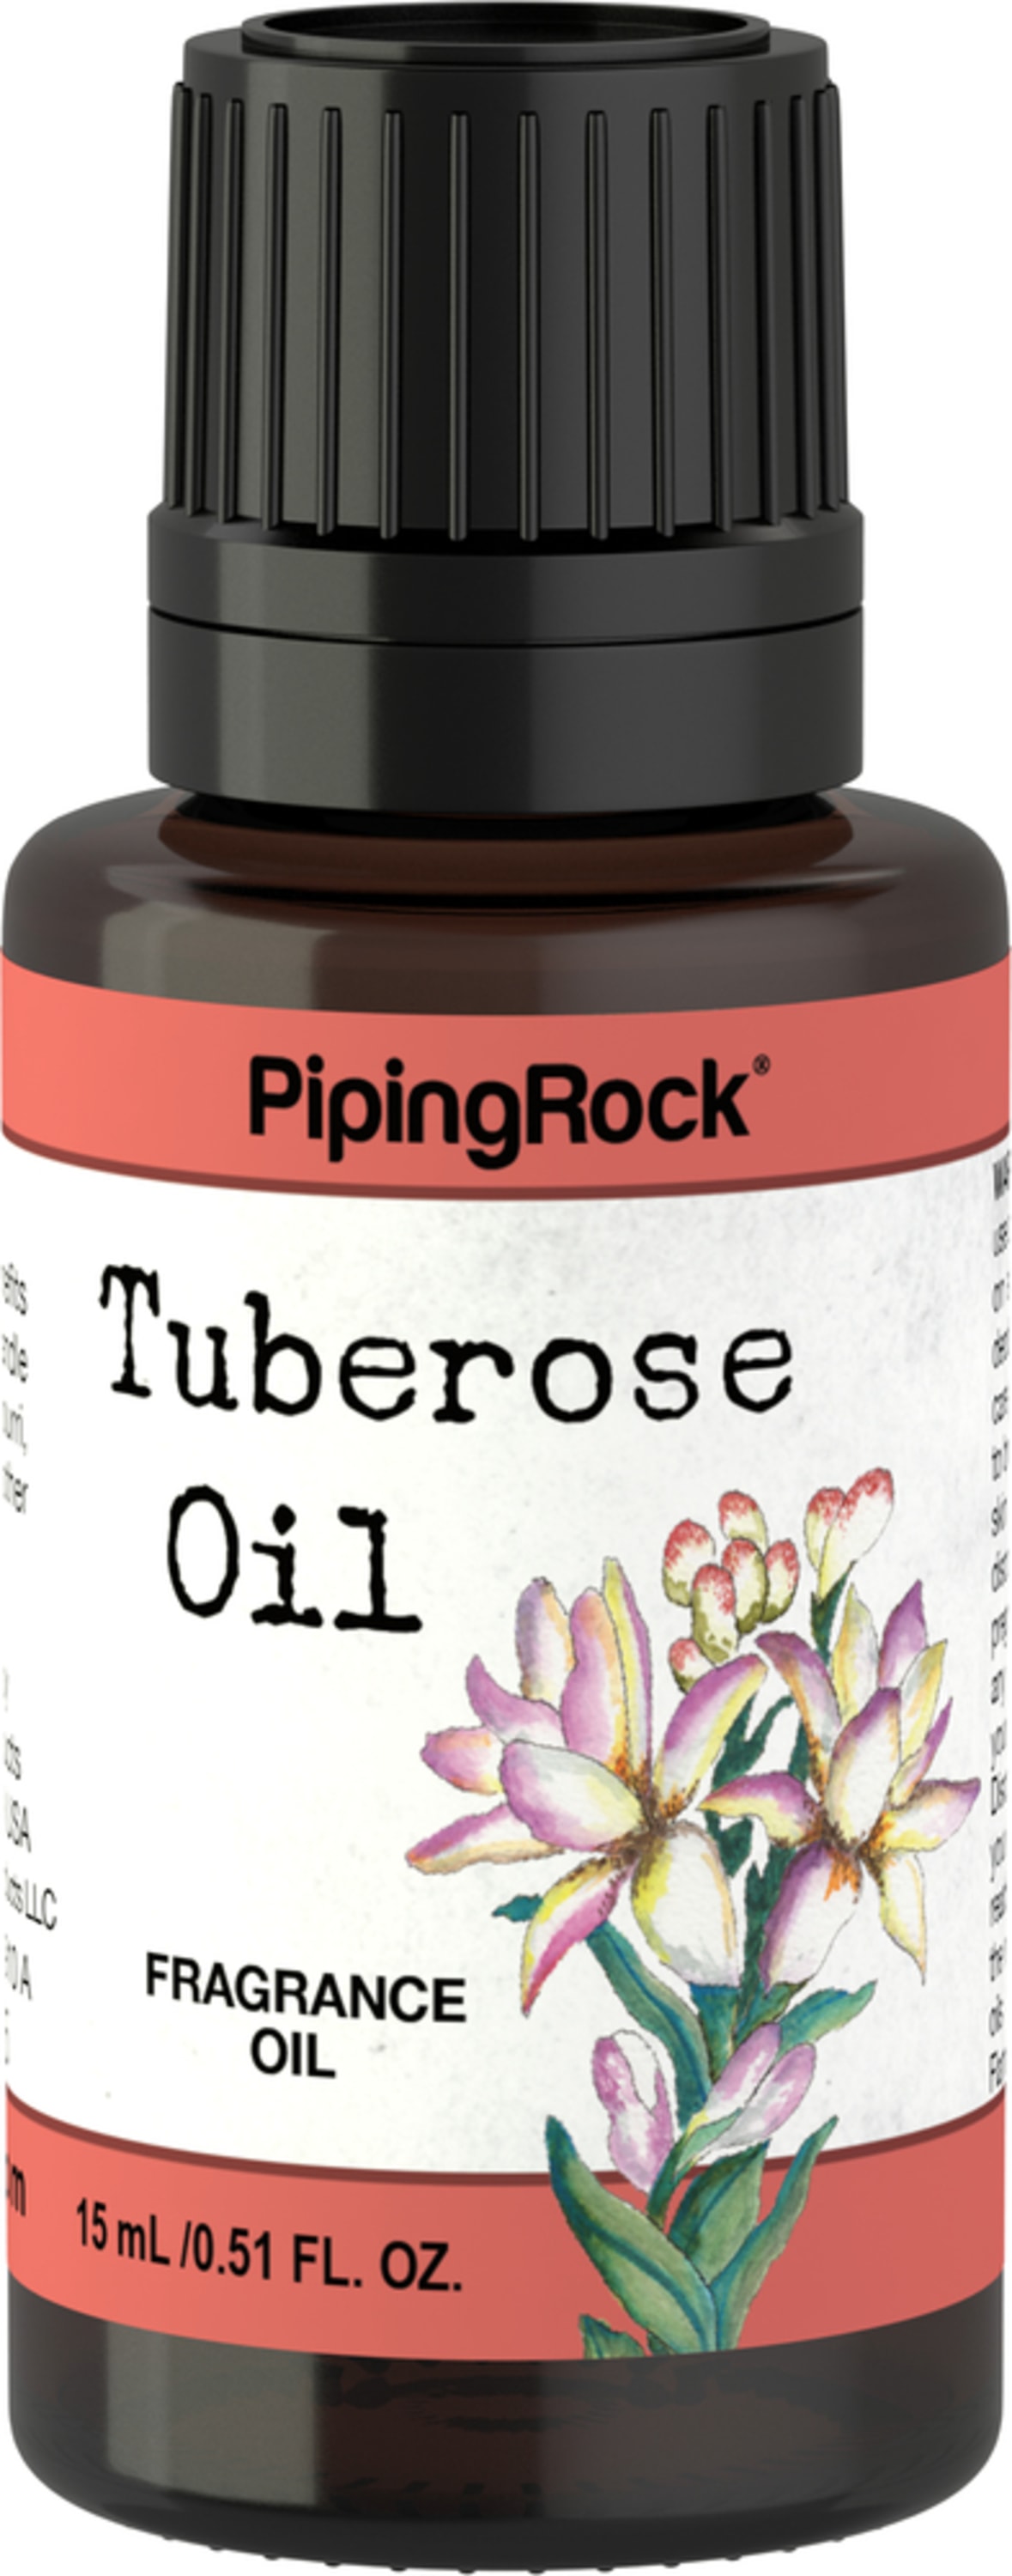 Piping Rock Tuberose Fragrance Oil 15 Ml/0.51 fl. oz. Dropper Bottle